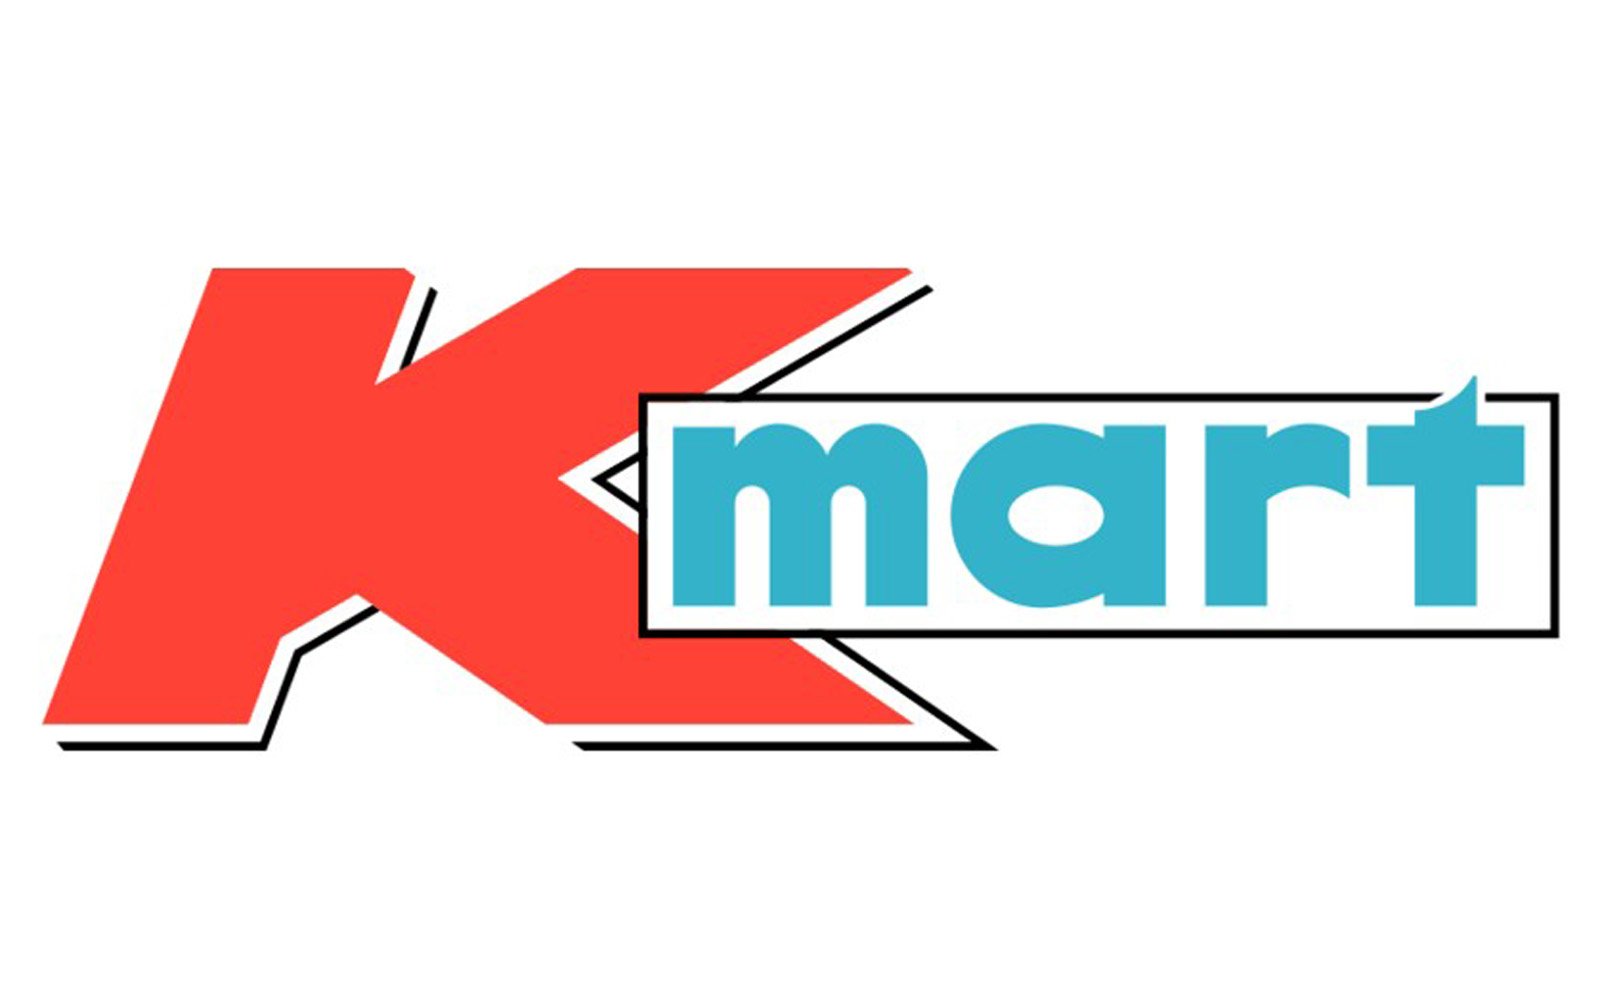 kmart logo